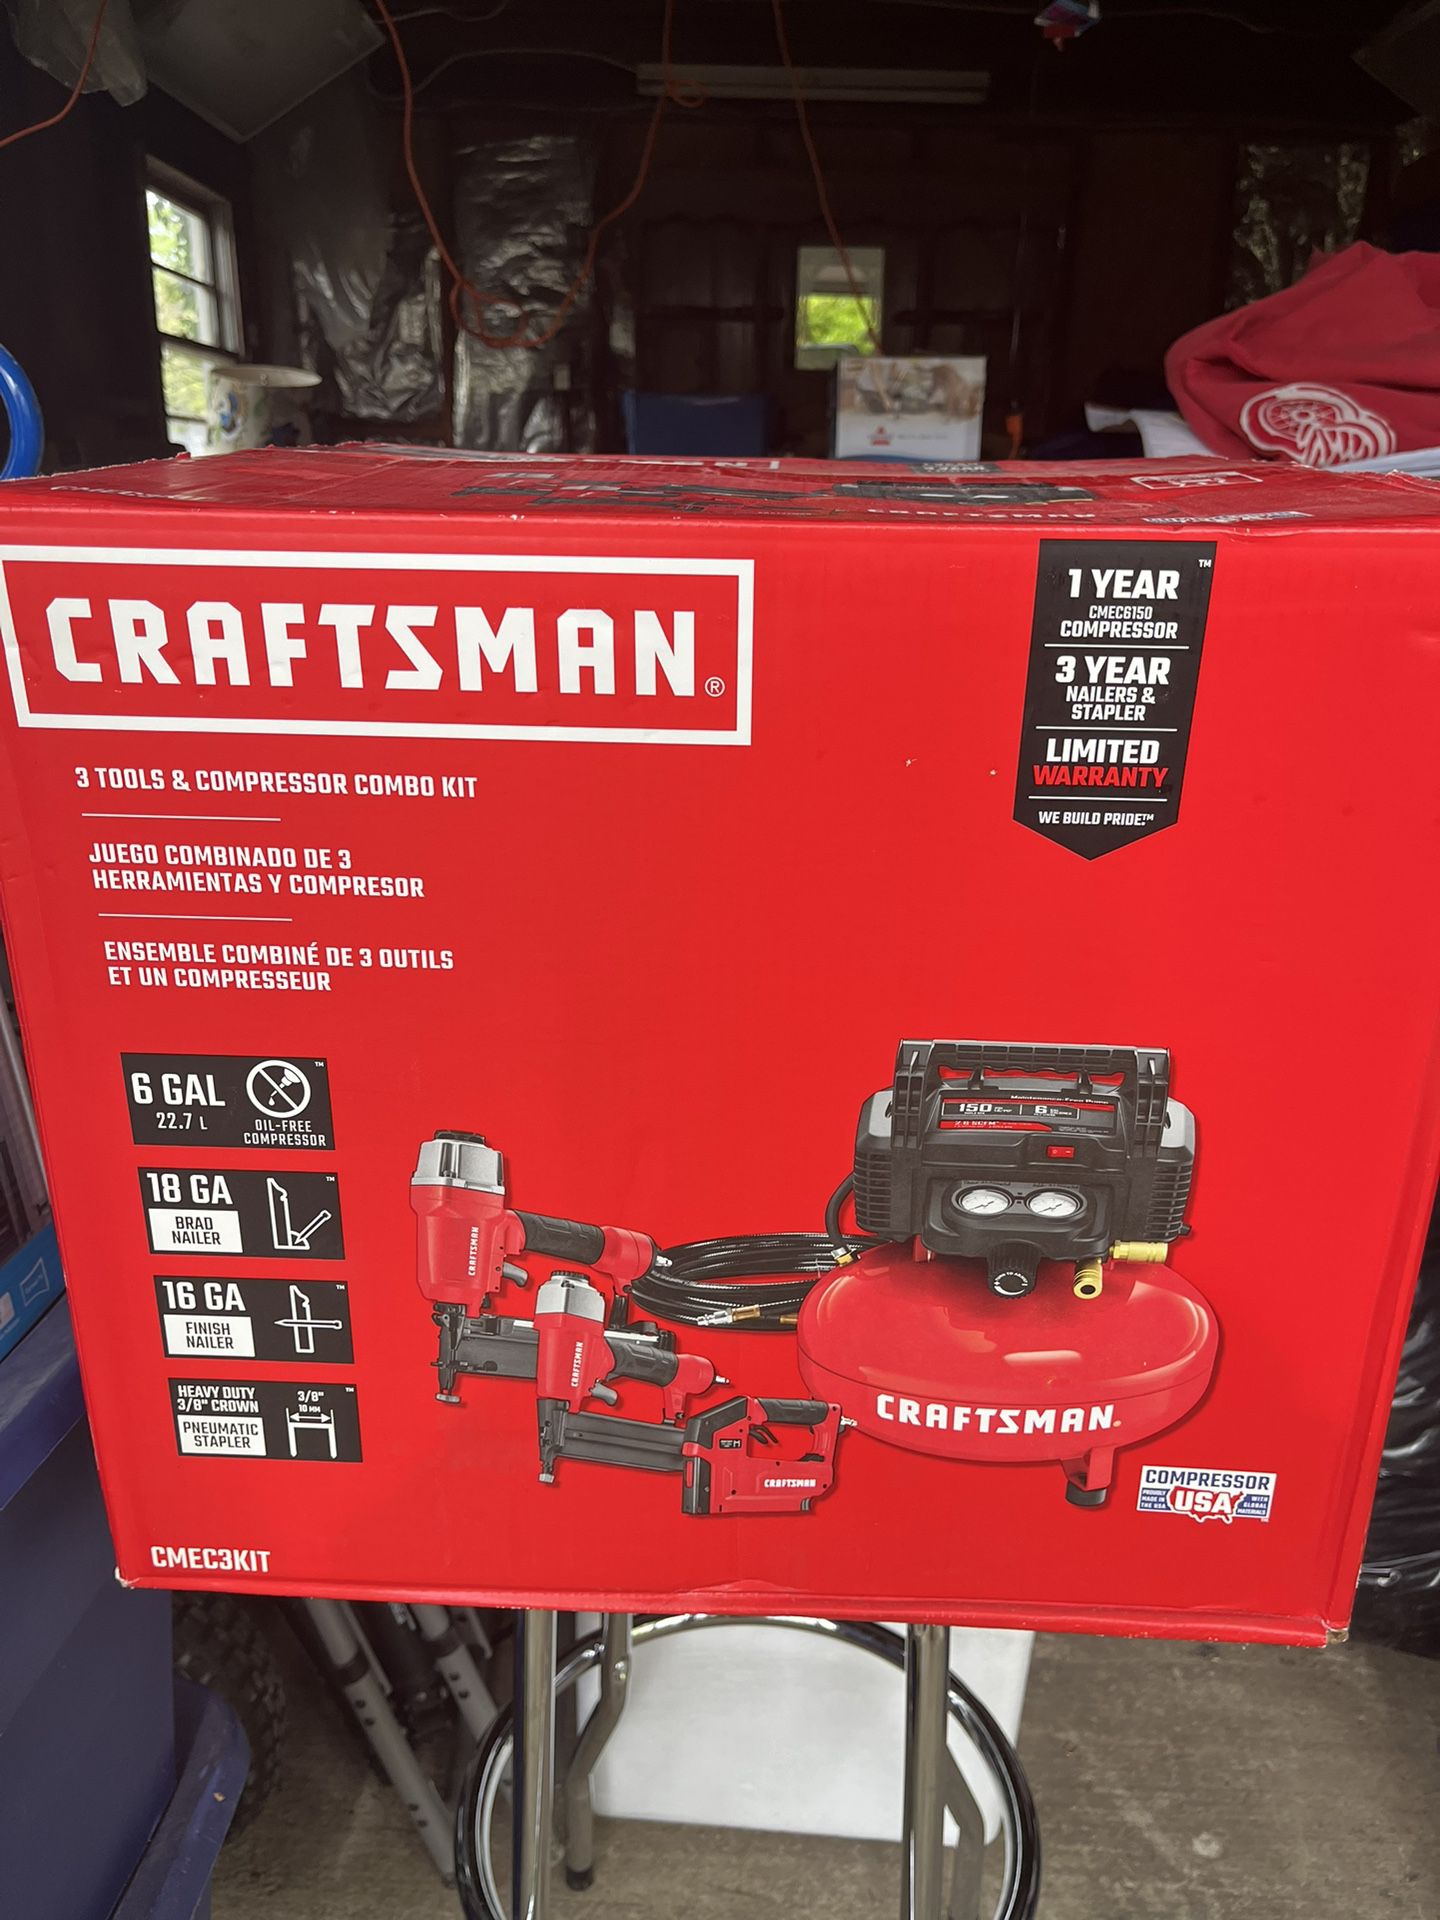 Craftsman (3) Piece Compressor (2) Nailers And (1) Stapler